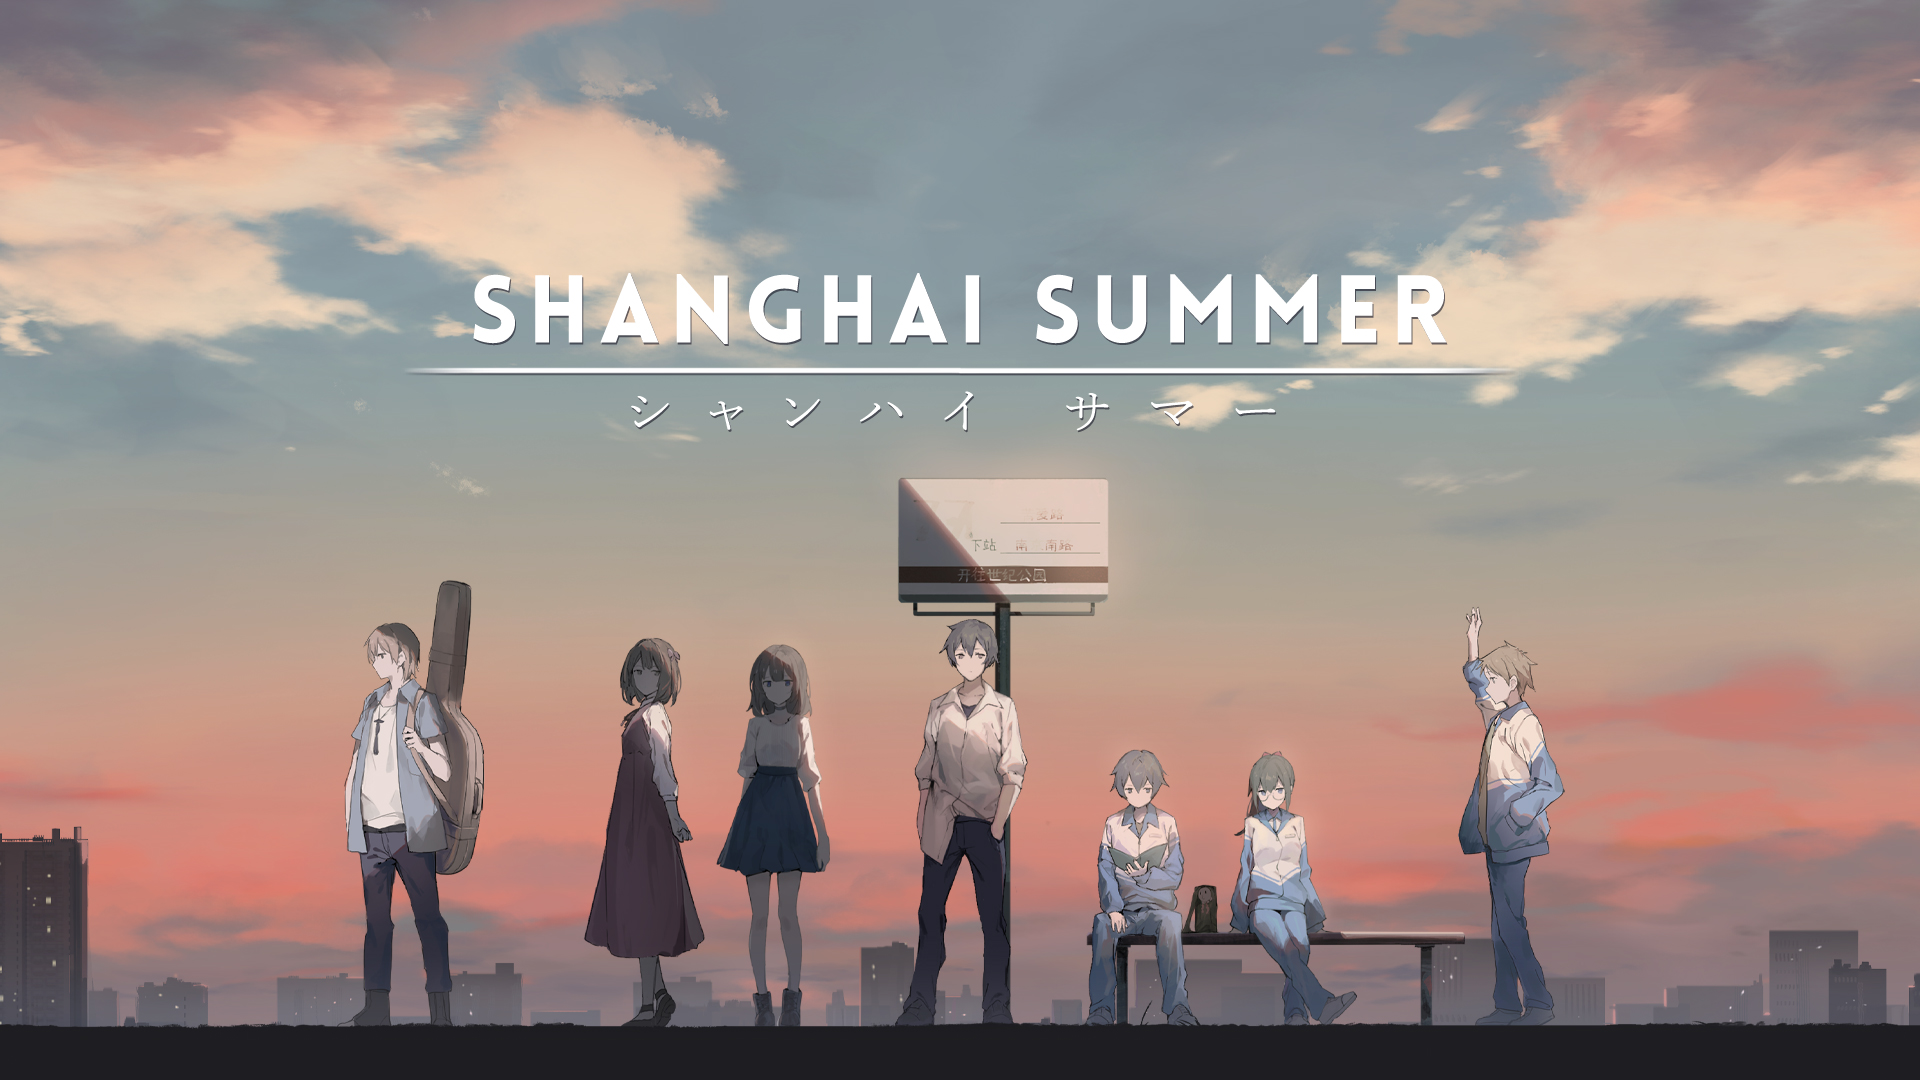 Shanghai Summer